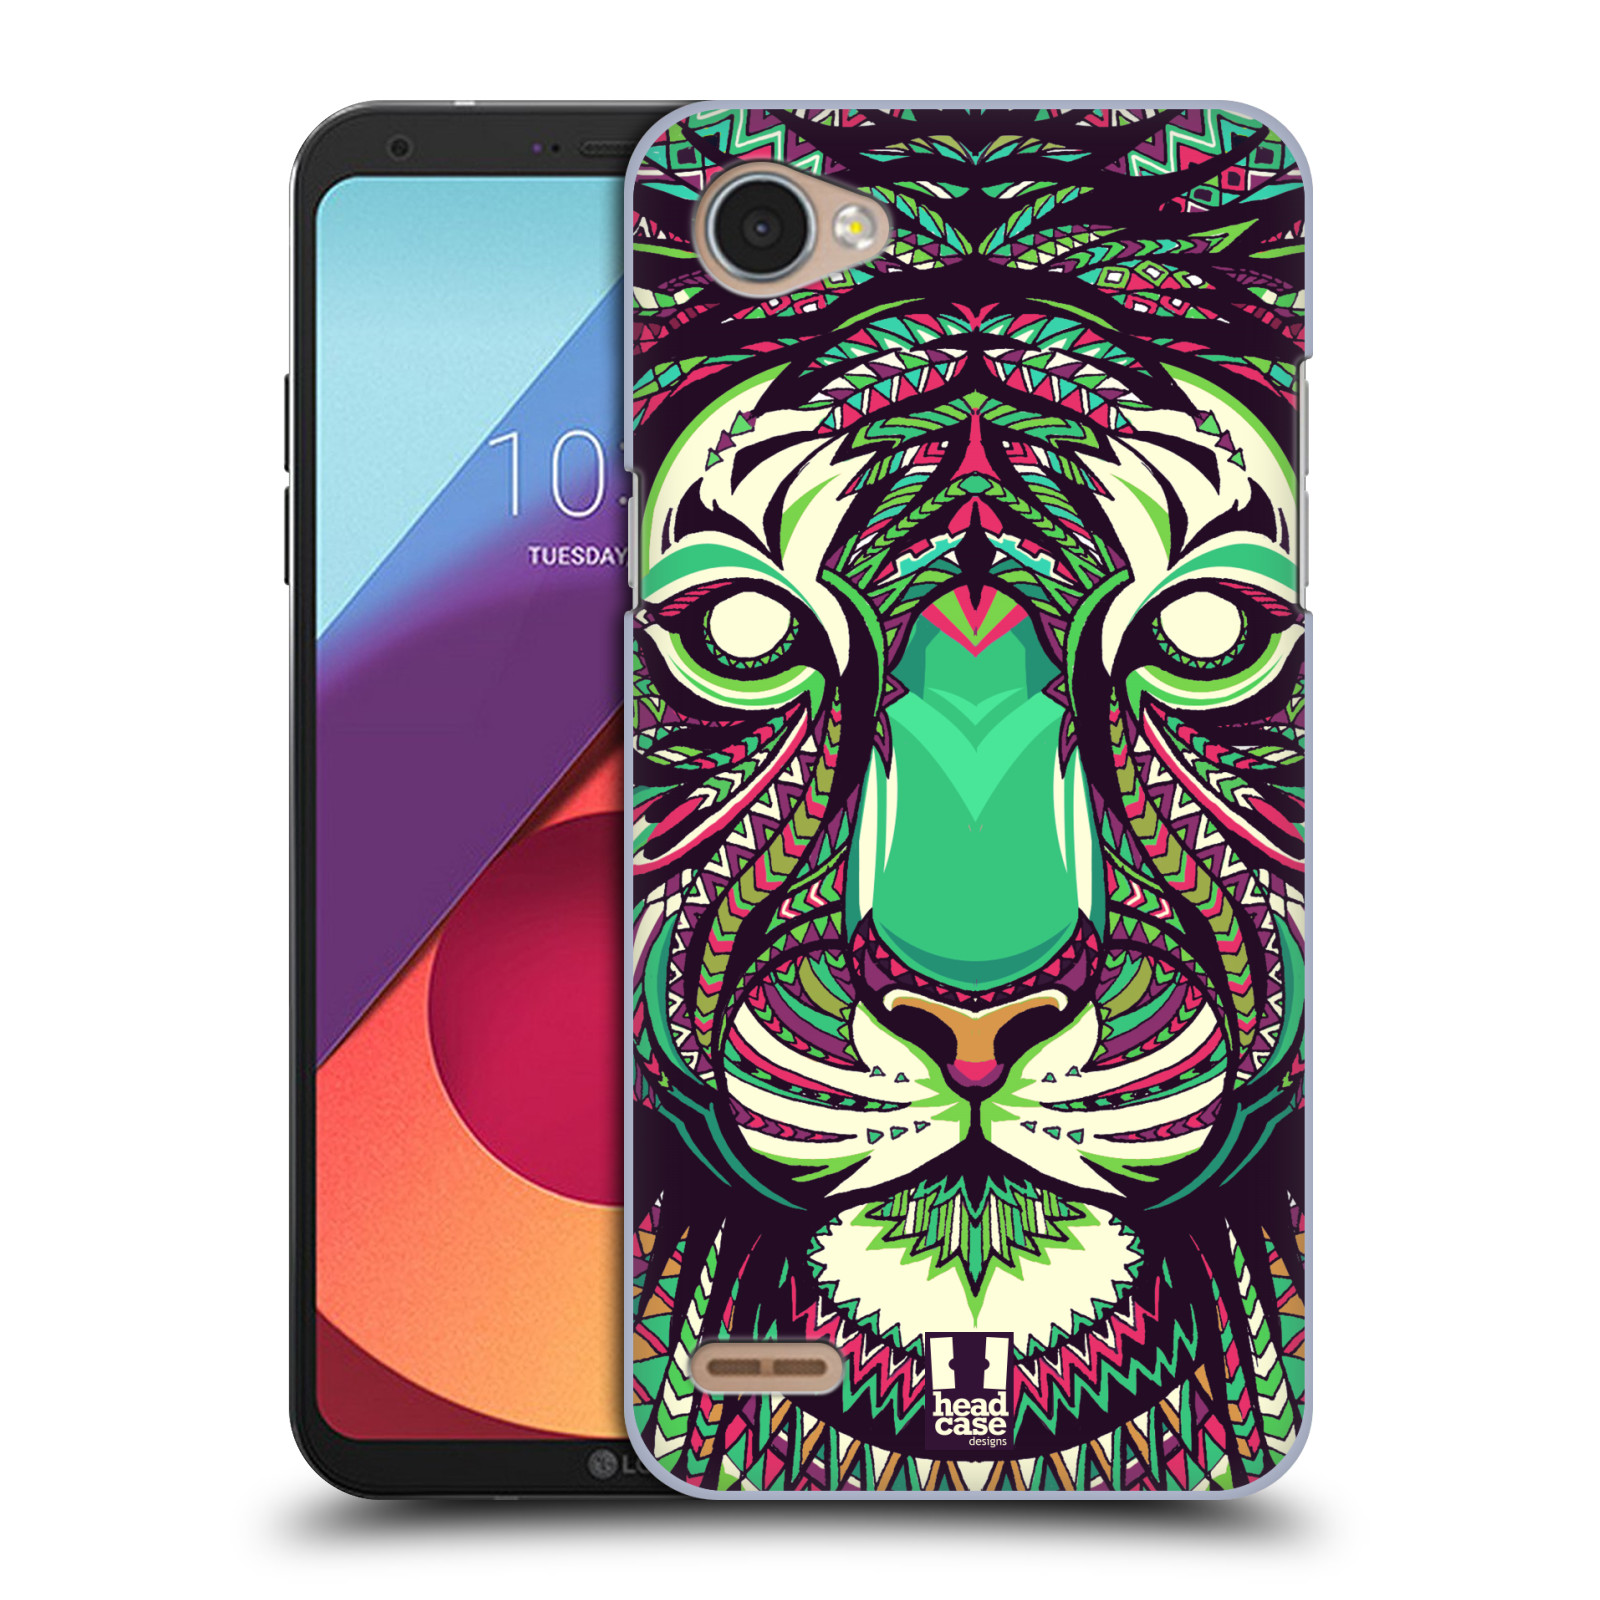 HEAD CASE plastový obal na mobil LG Q6 / Q6 PLUS vzor Aztécký motiv zvíře 2 tygr